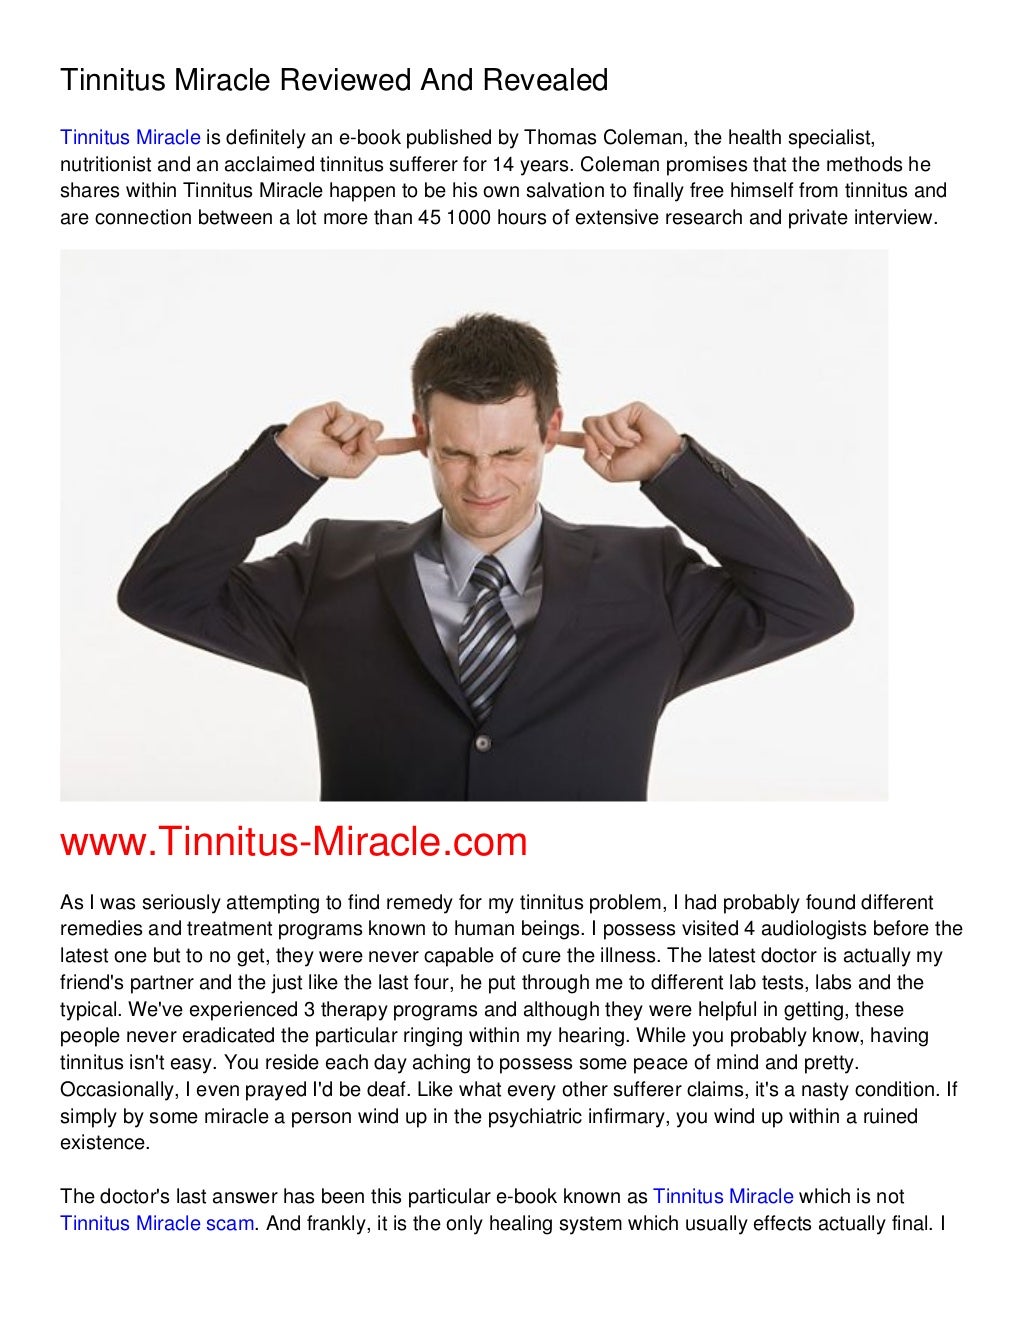 Tinnitus Hypertension : What On Earth Is Caemploying My Tinnitus Headache